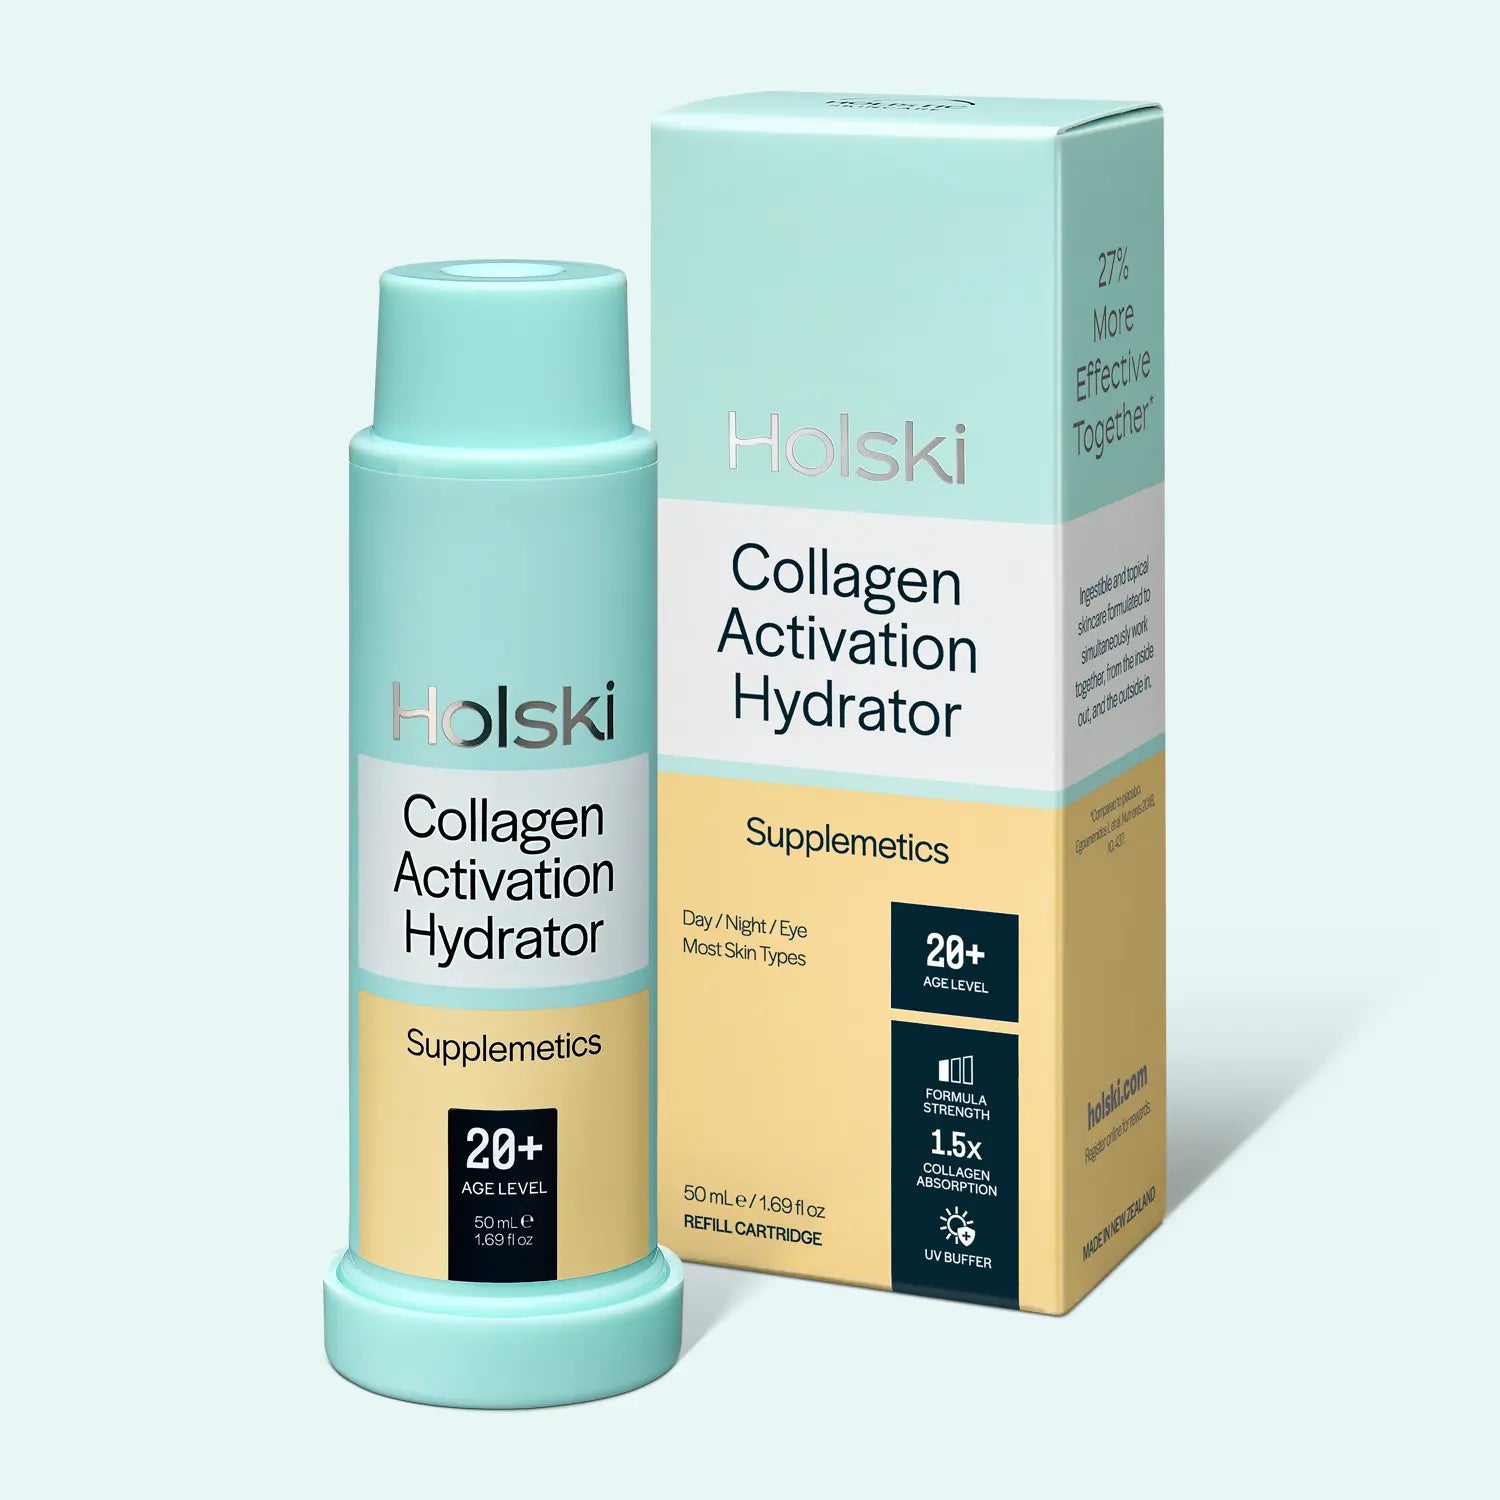 20+ Collagen Activation Hydrator (Refill)